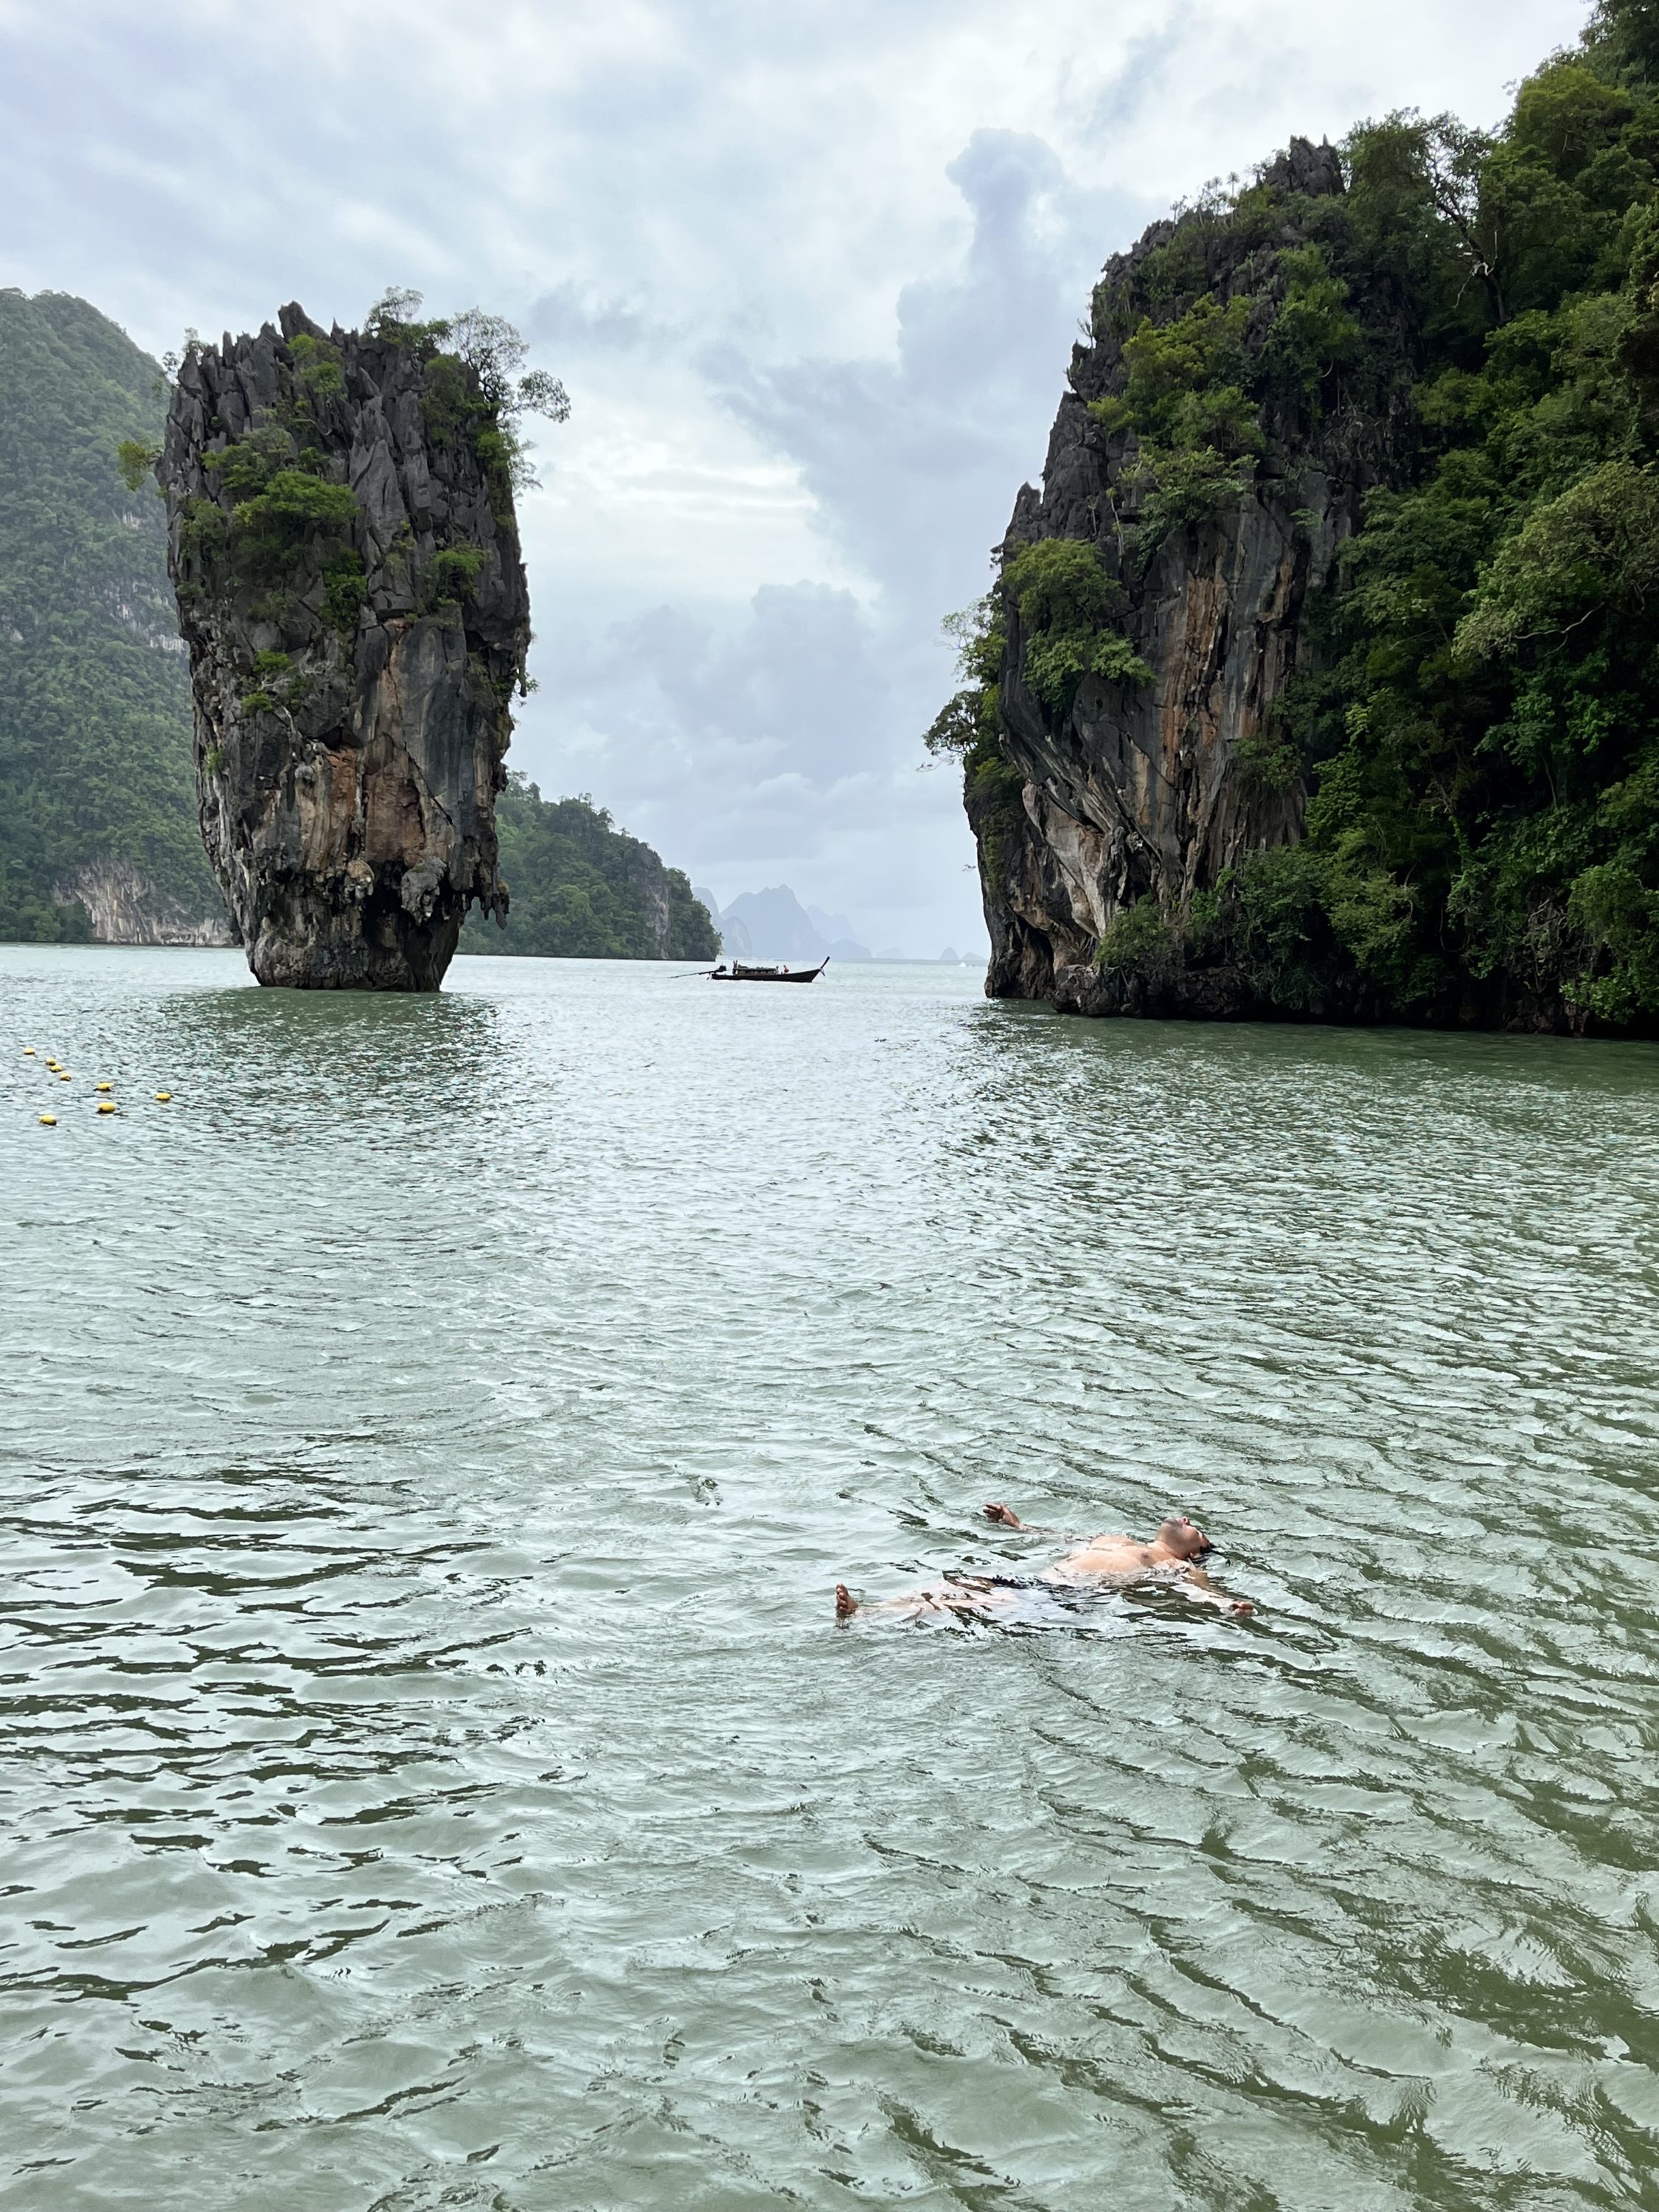  Edson floating @ James Bond Island